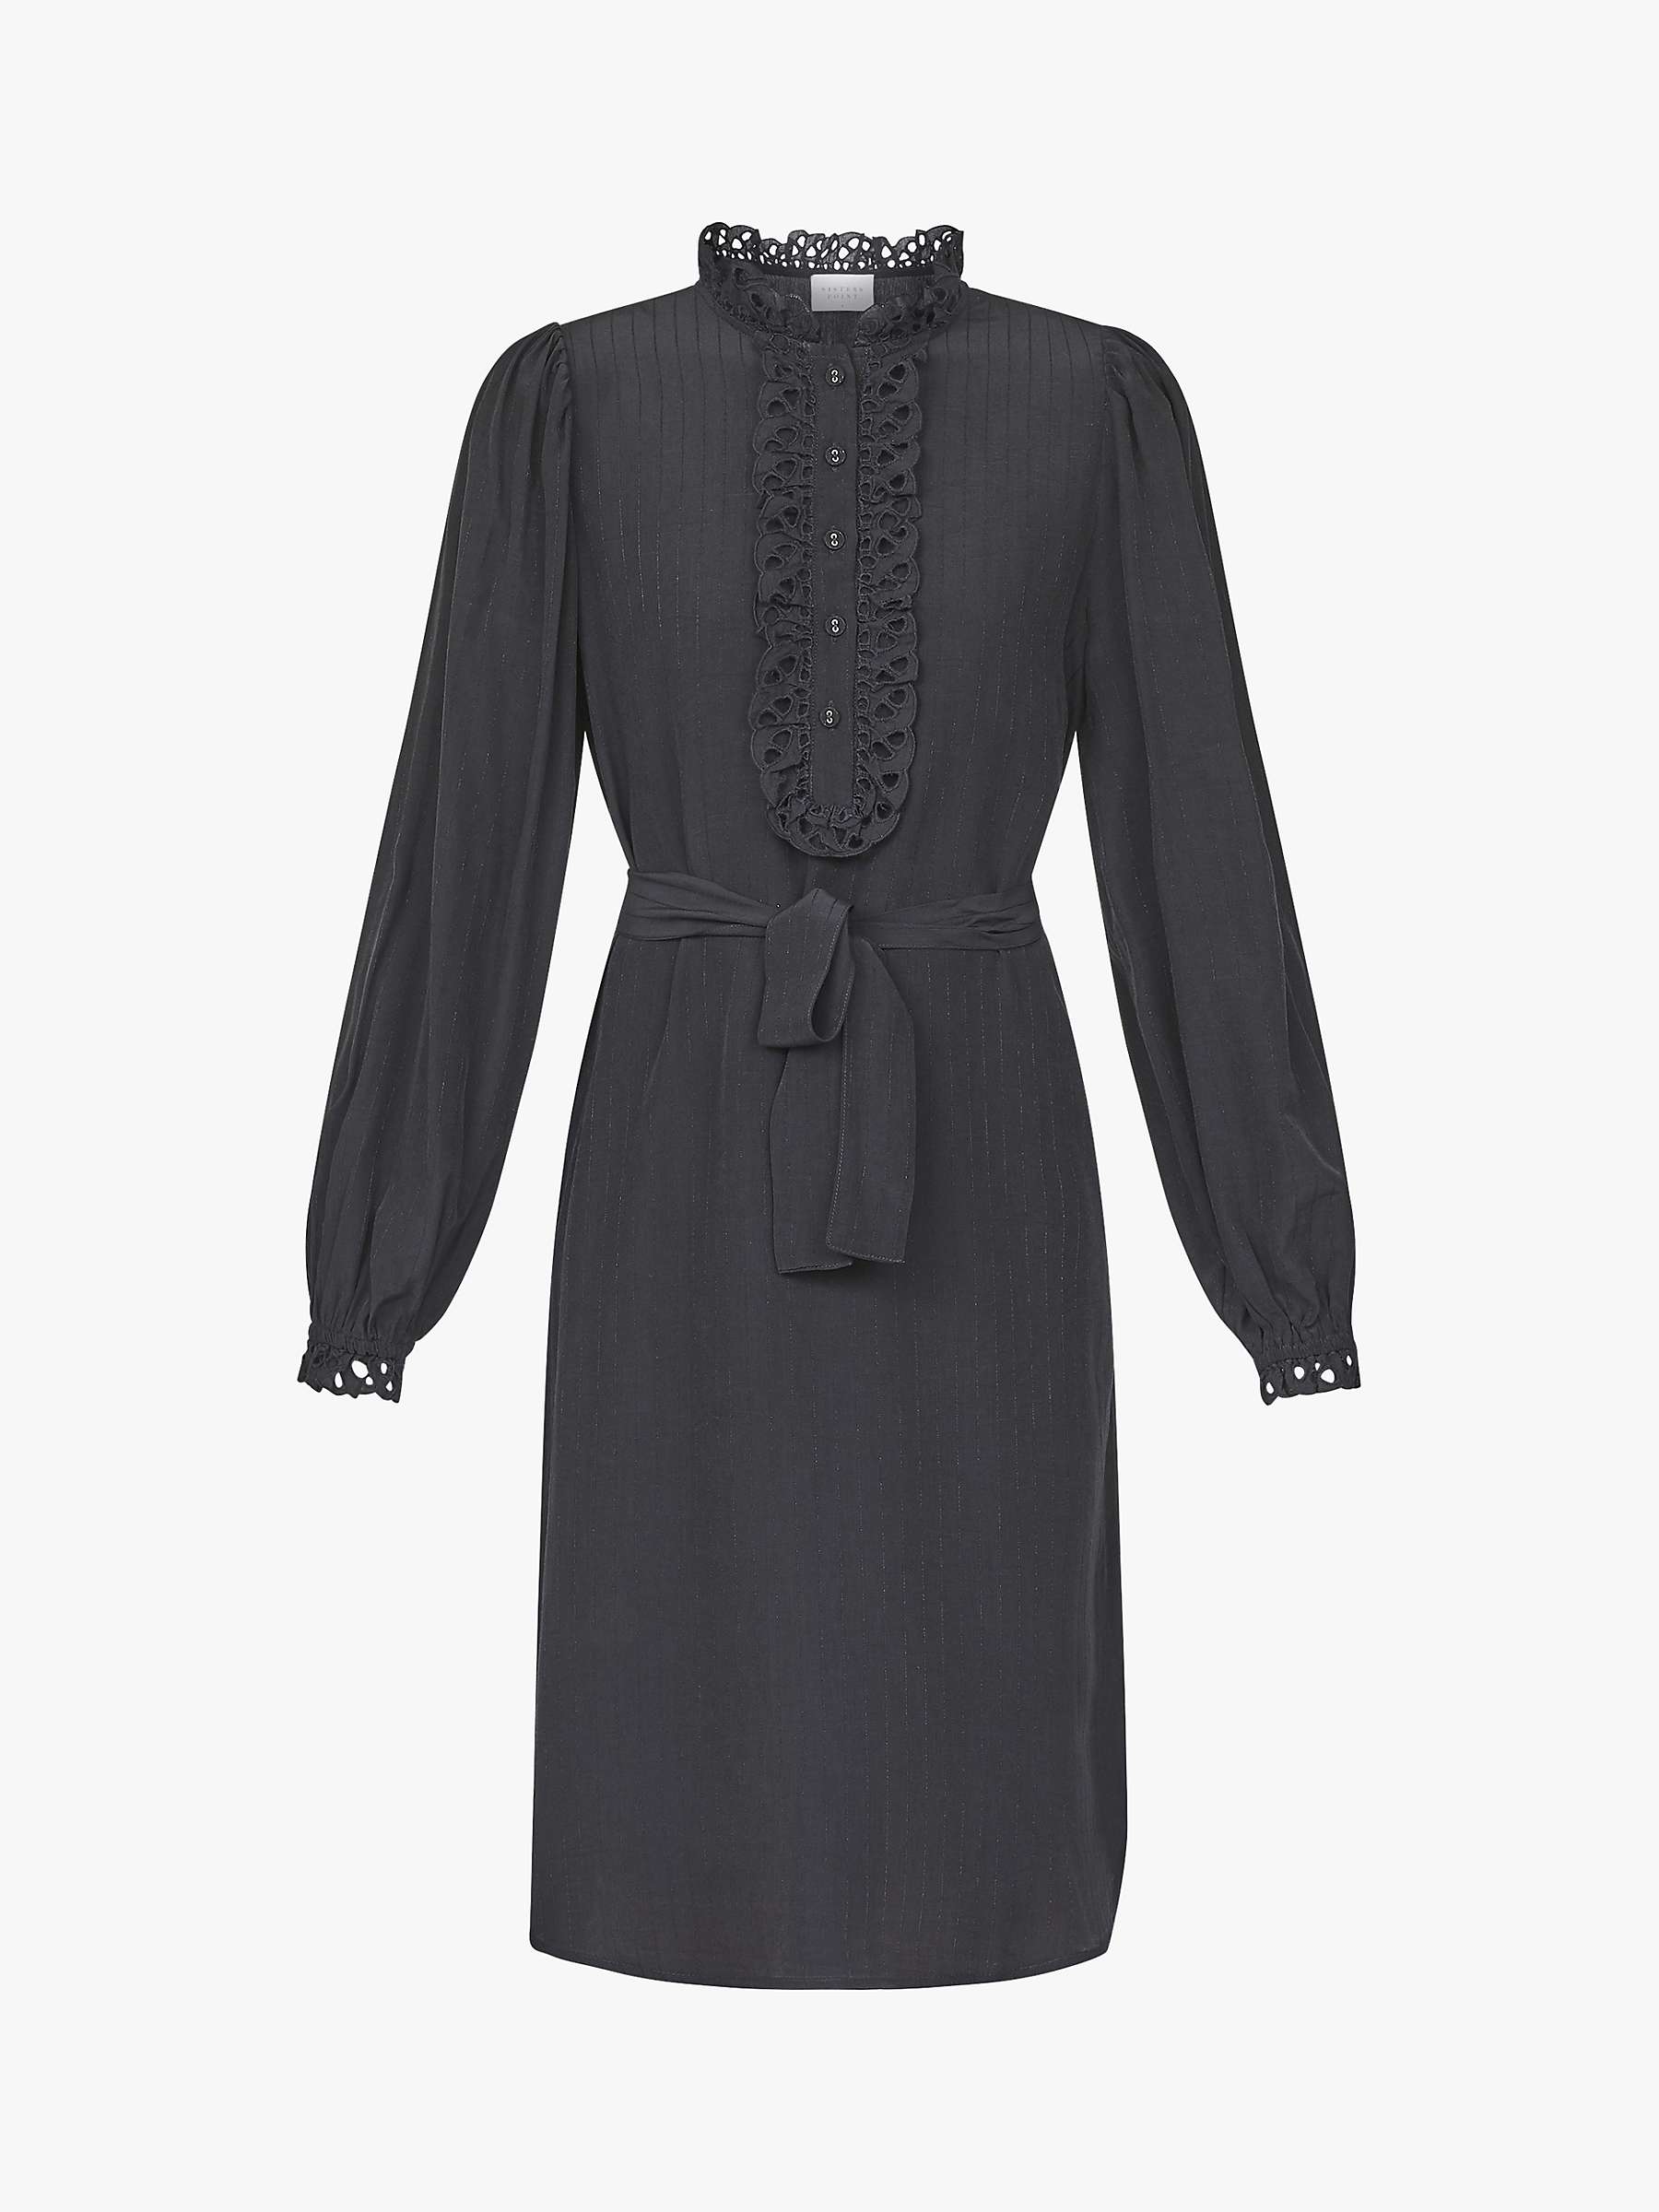 Buy Sisters Point Viada Lace Feminine Dress, Black Online at johnlewis.com